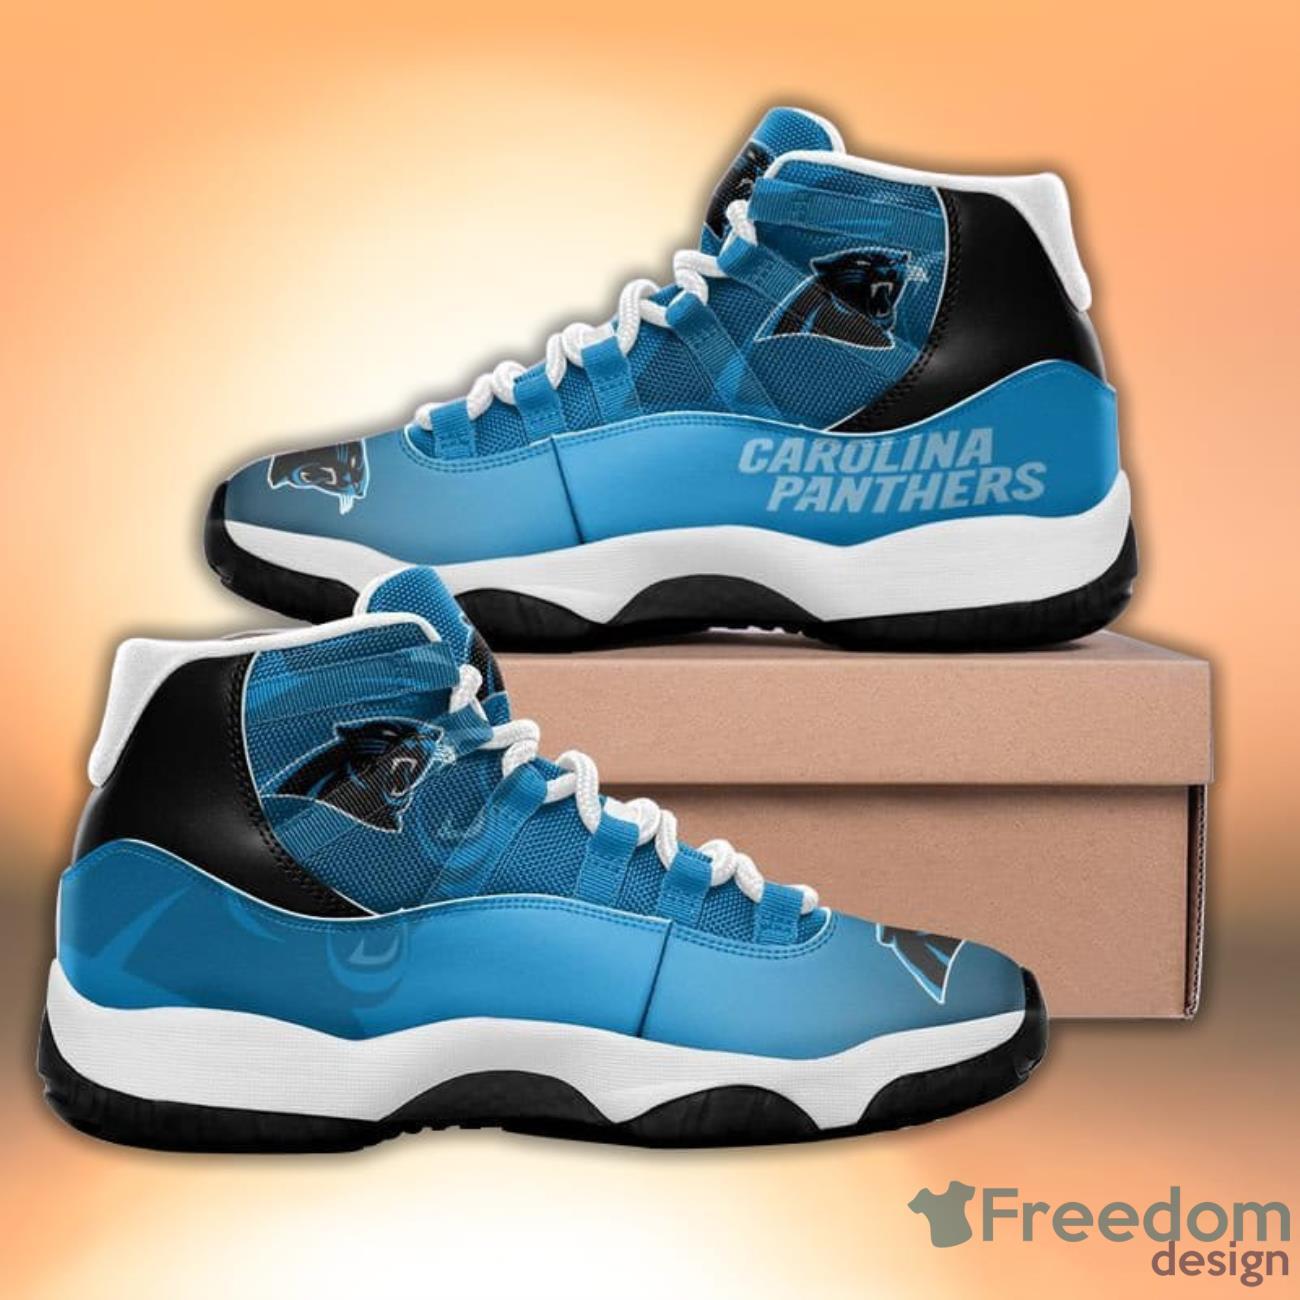 Carolina Panthers Pattern Galaxy Style Sneaker Air Jordan 11 Shoes